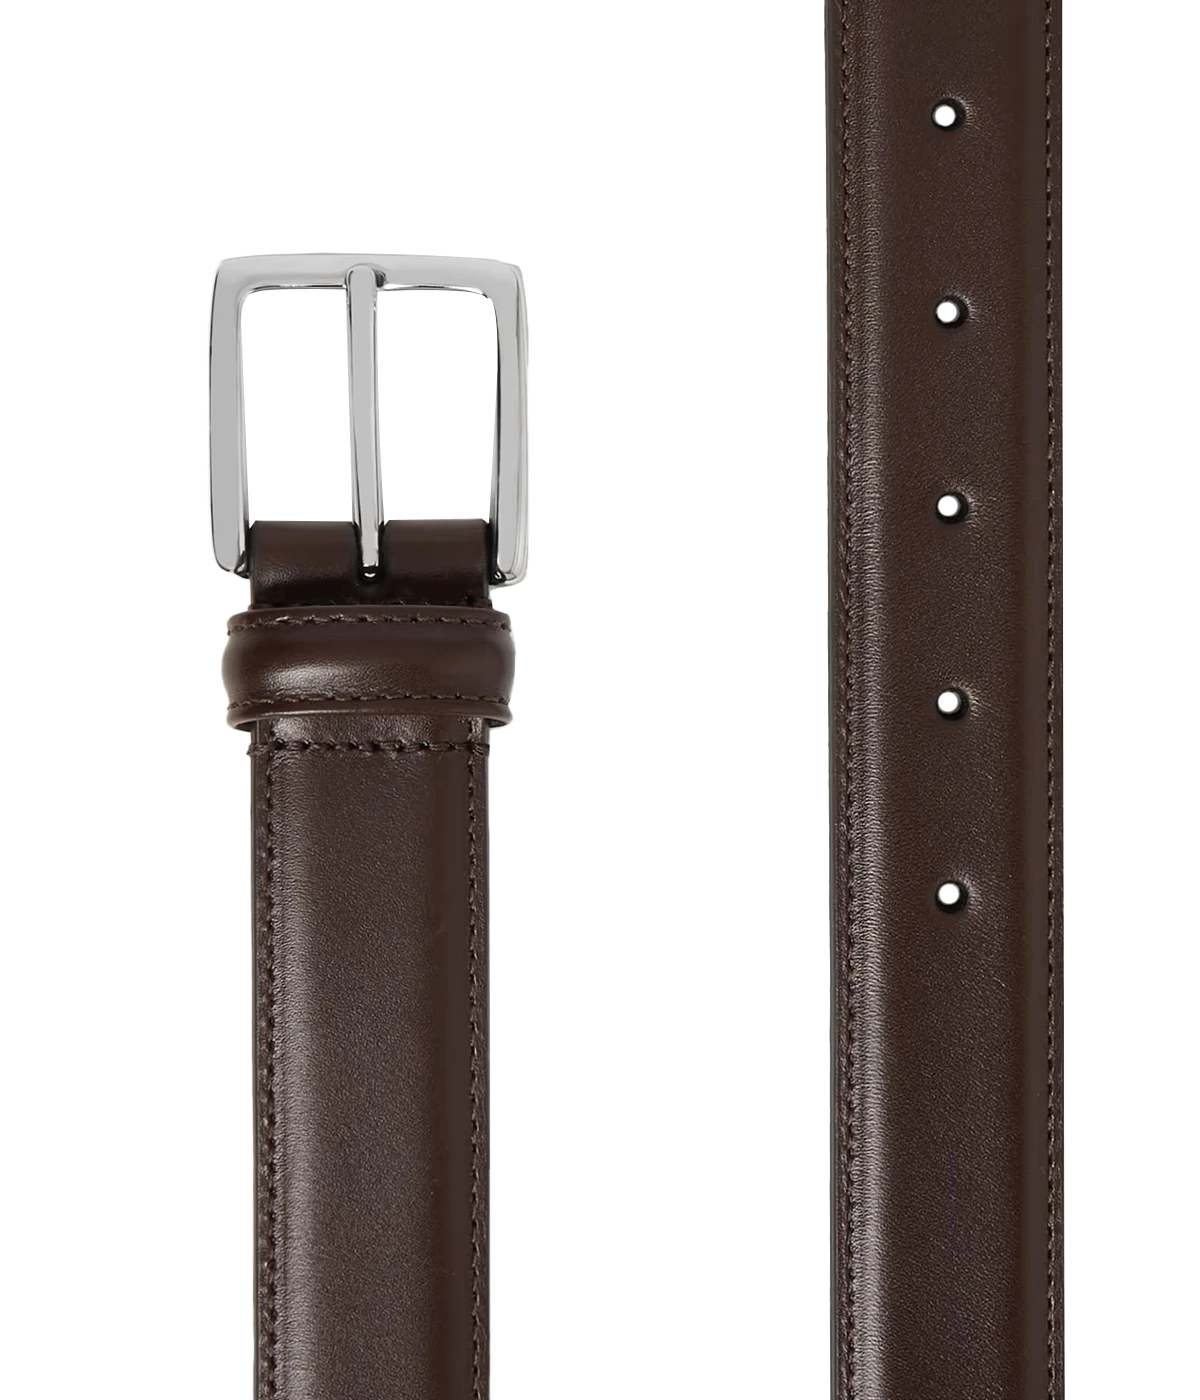 Smooth Leather Belt in Dark Brown